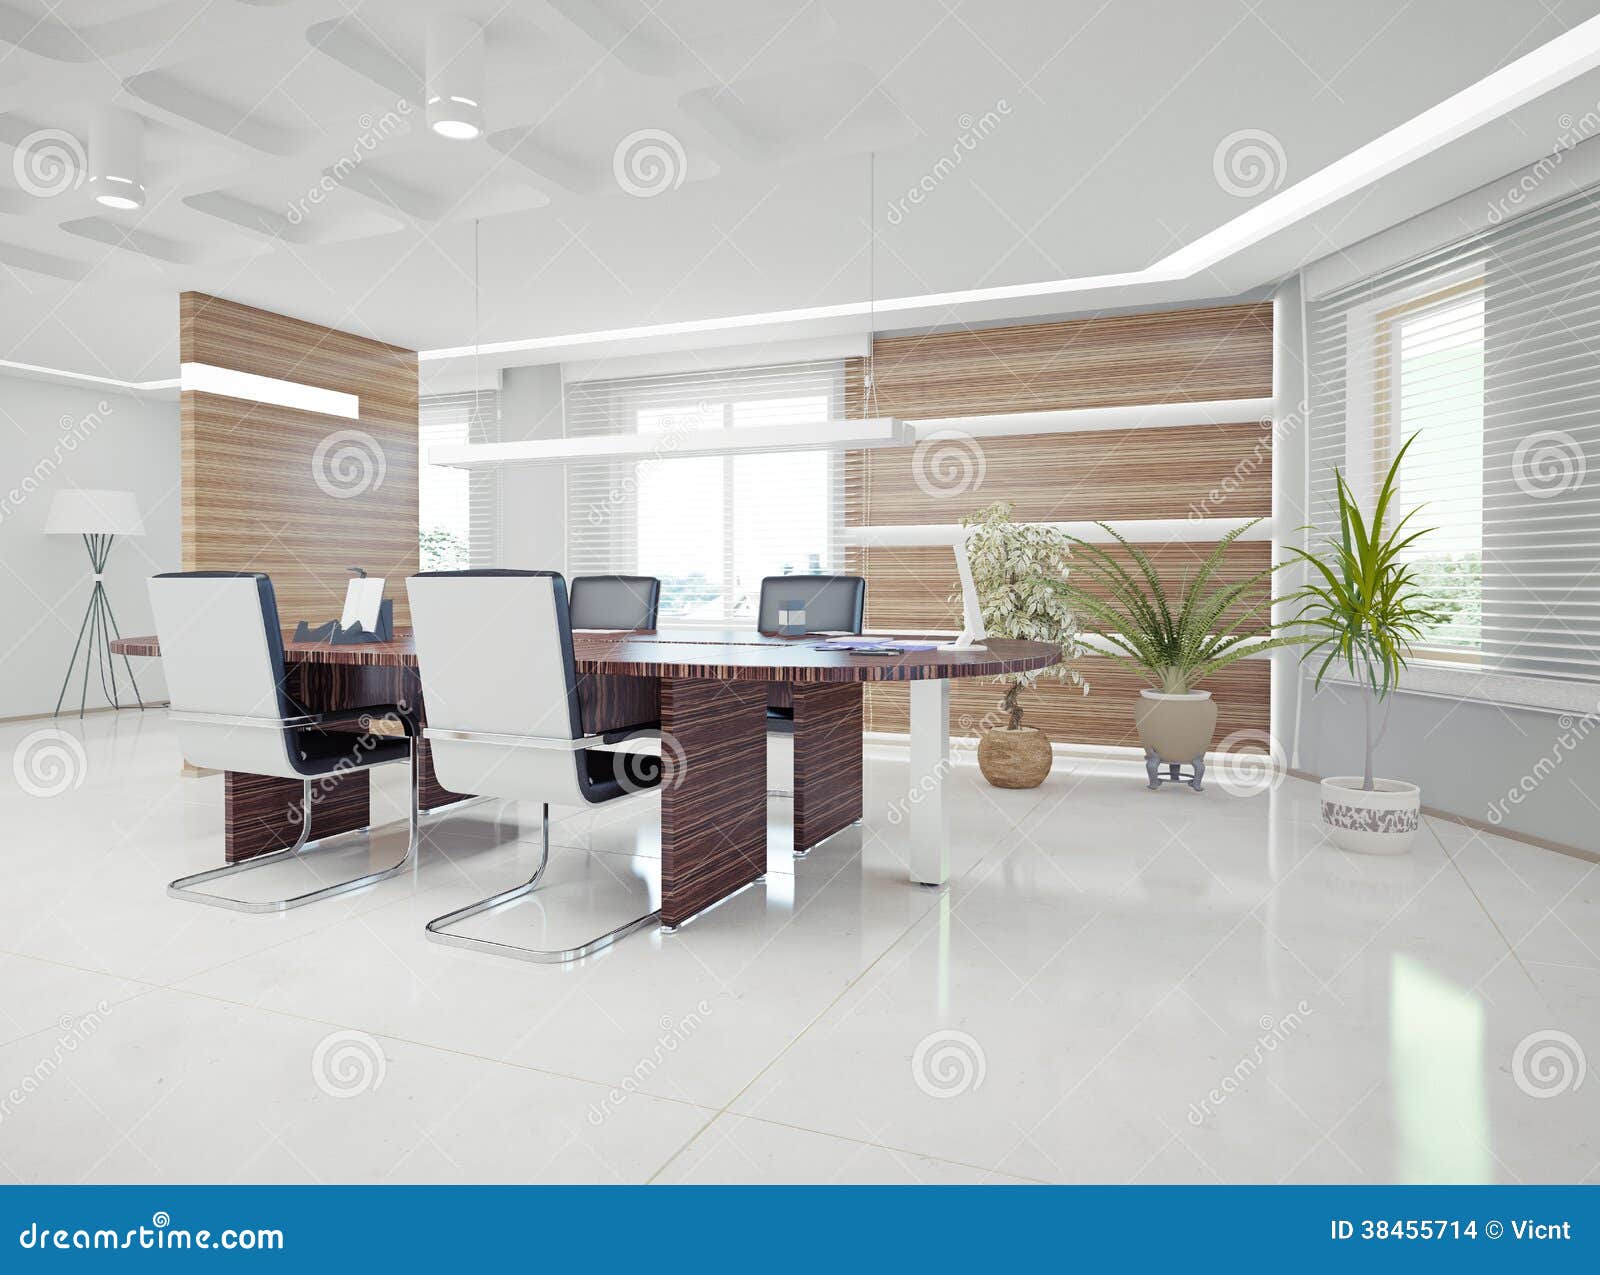 modern-office-interior-design-concept-38